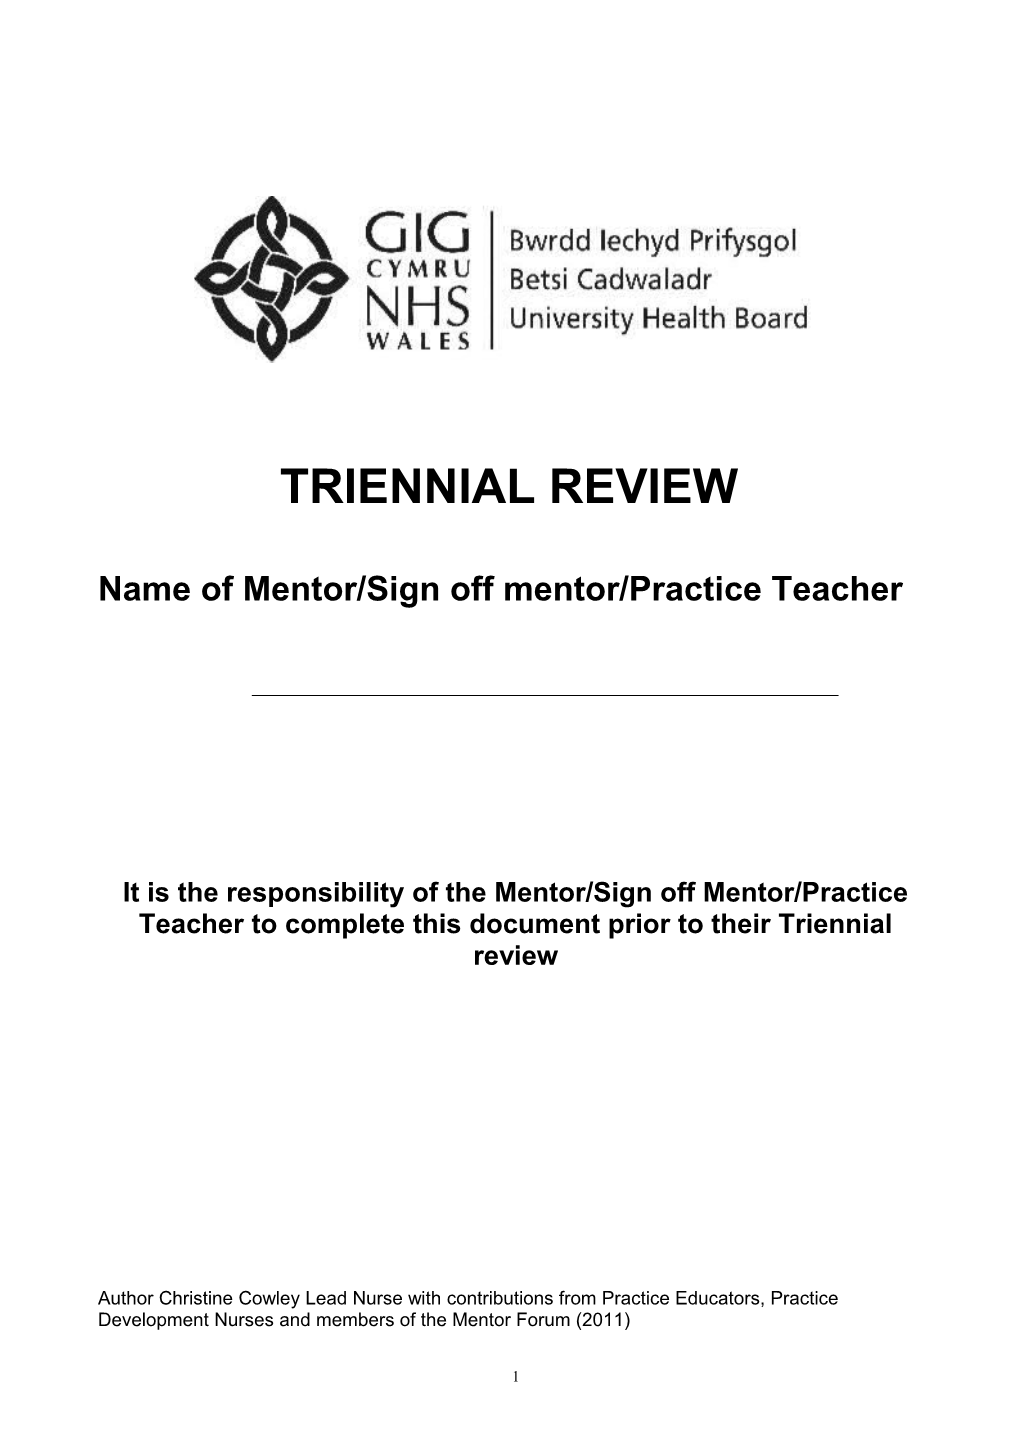 Name of Mentor/Sign Off Mentor/Practice Teacher